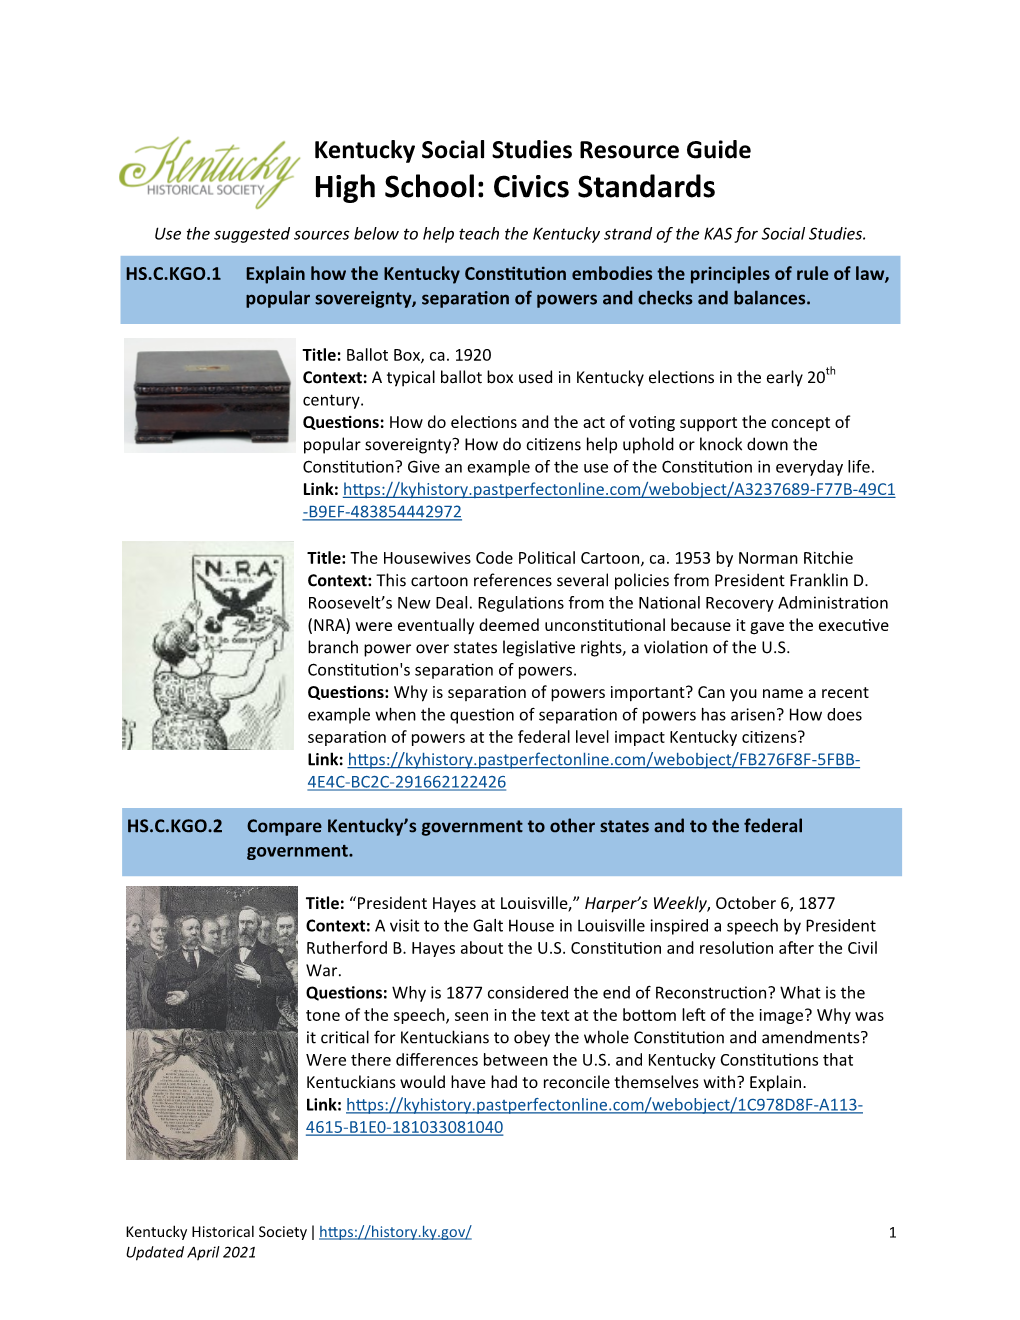 High School: Civics Standards